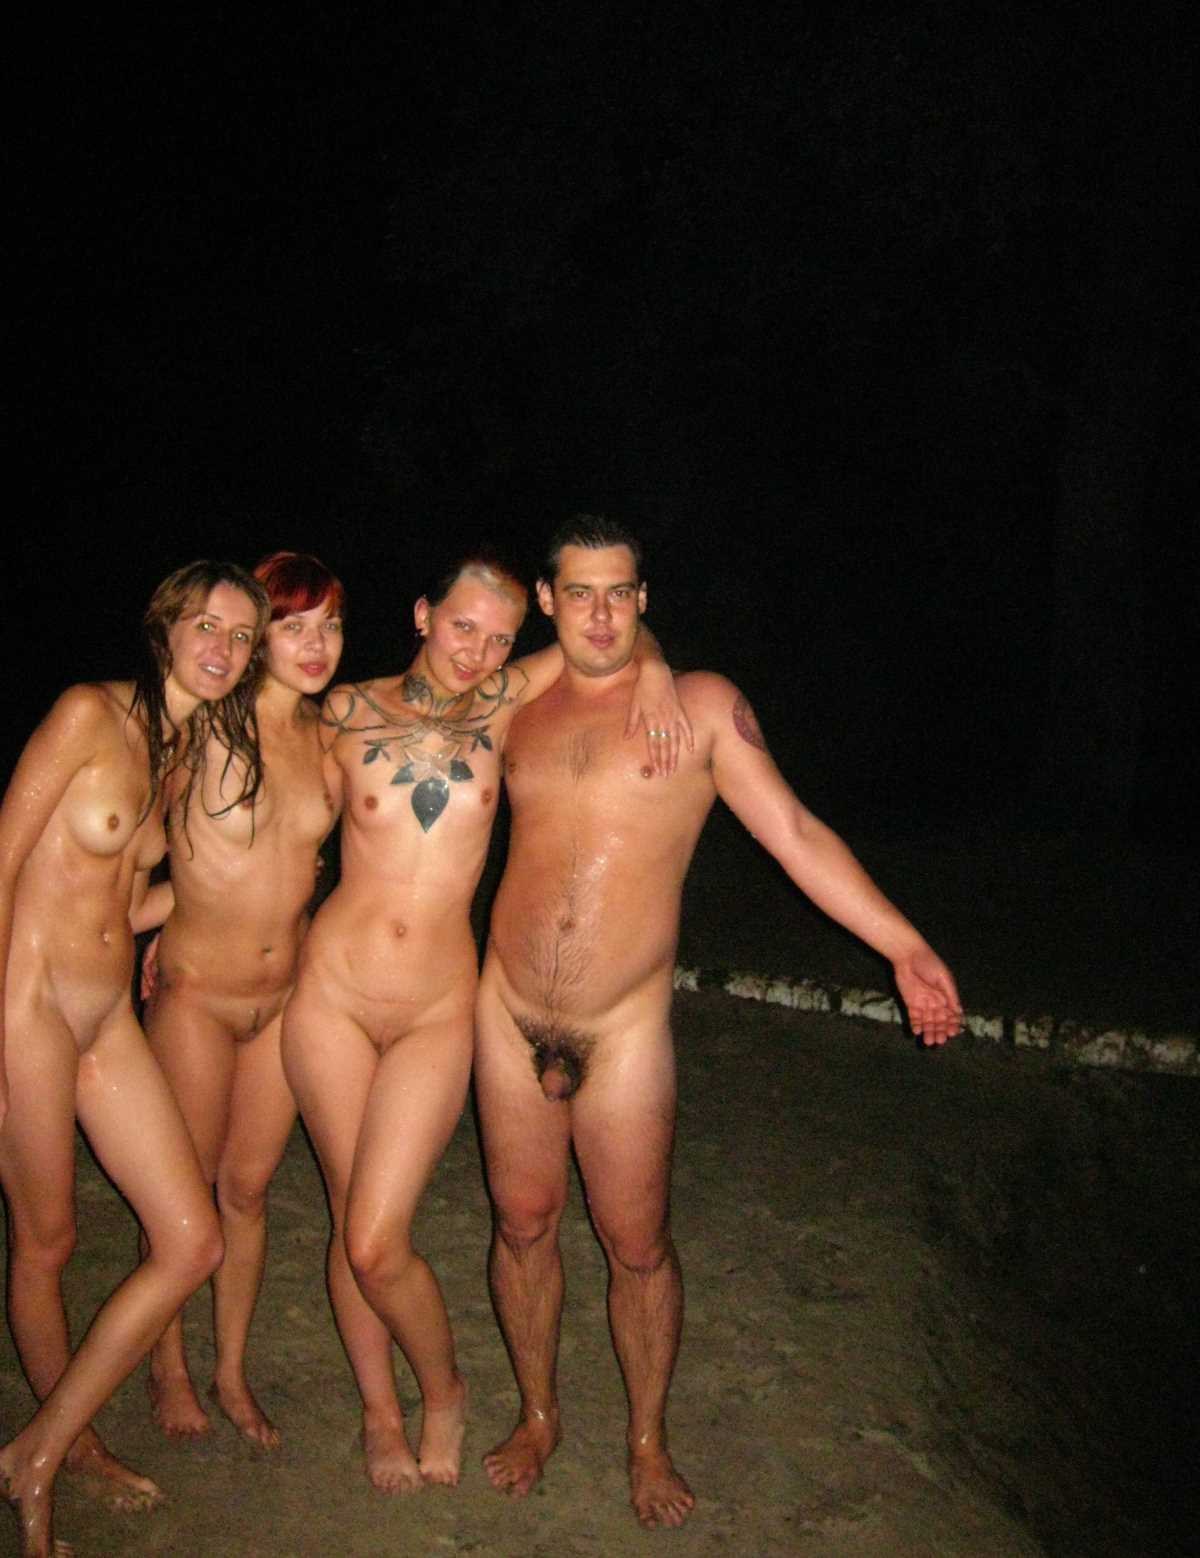 https://xphoto.name/uploads/posts/2021-12/1638421805_61-xphoto-name-p-real-nudist-college-porn-75.jpg